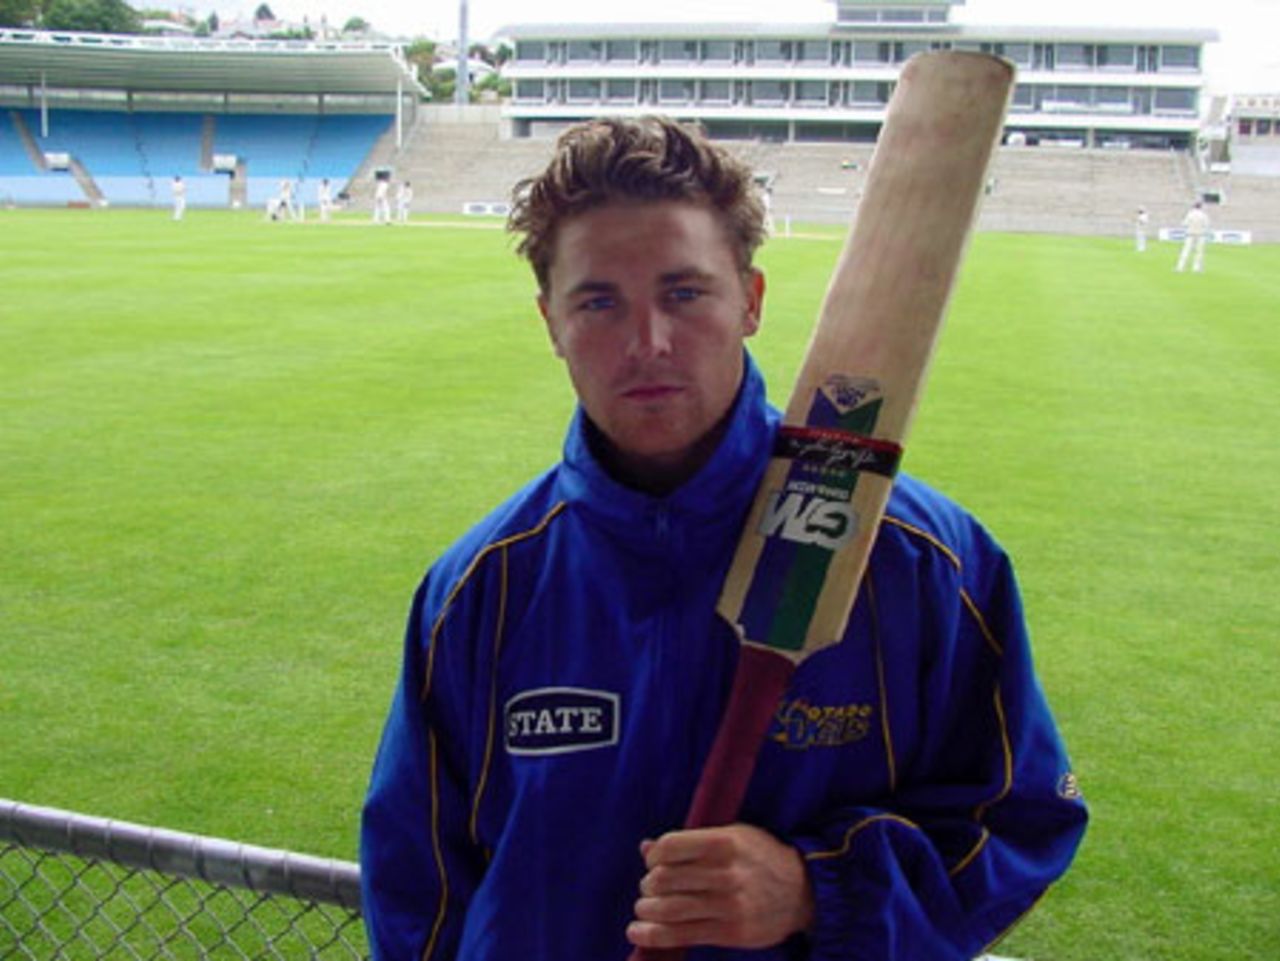 Otago batsman Brendon McCullum shortly after scoring his maiden first-class century. McCullum made 142 in his first innings. State Championship: Otago v Auckland at Carisbrook, Dunedin, 18-21 Dec 2001 (19 December 2001).